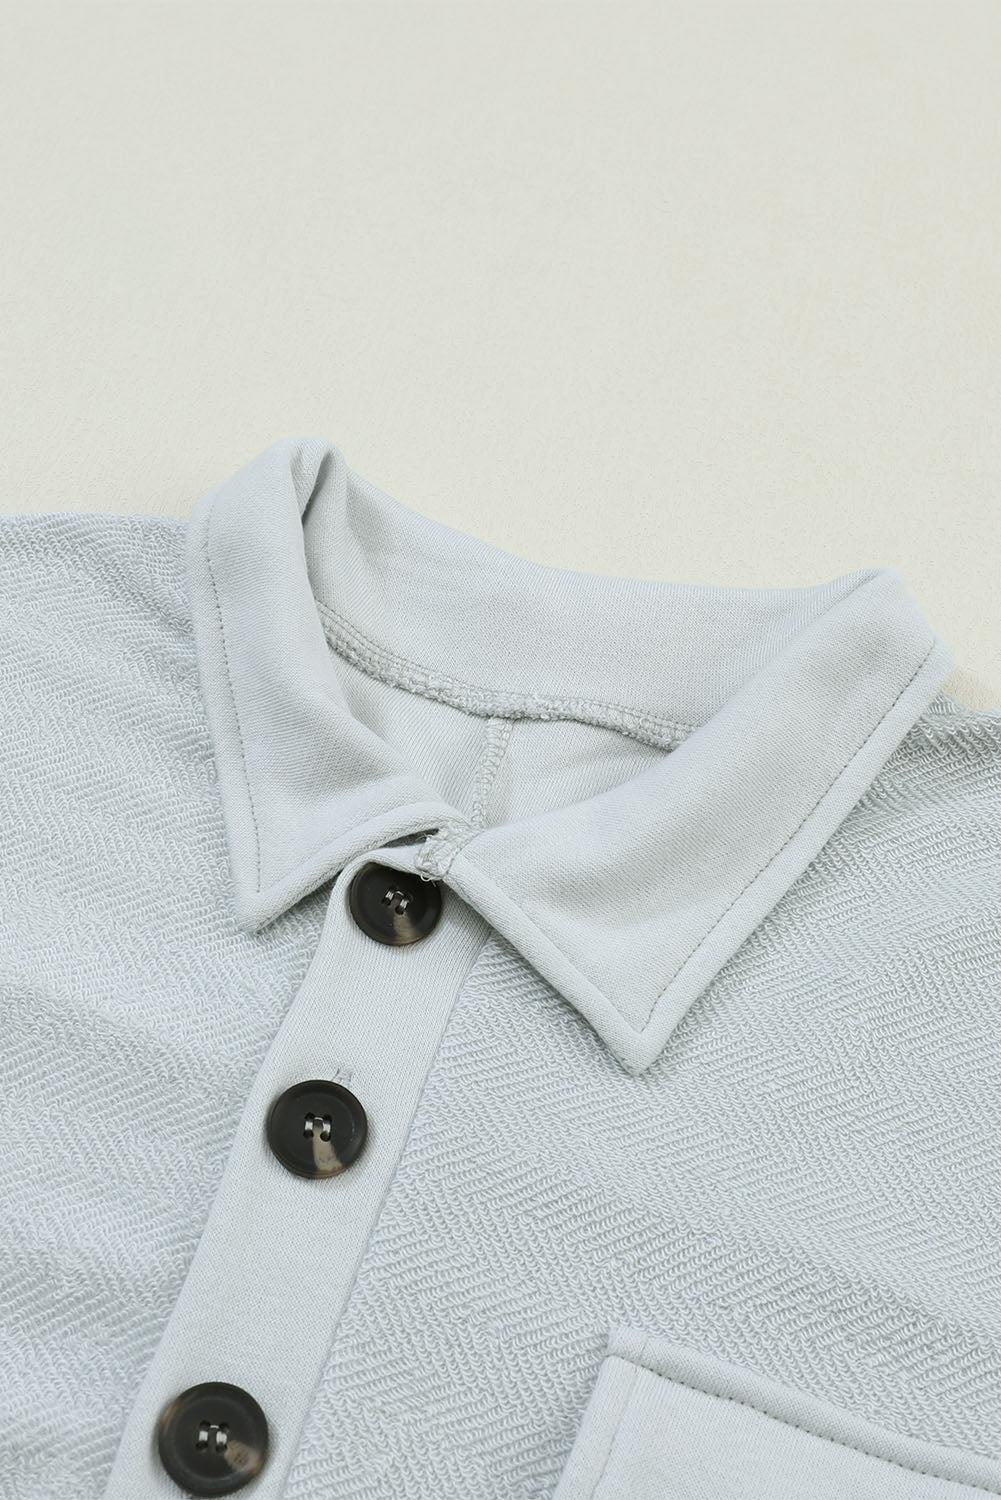 White oversized flap pockets button collared sweatshirt - sweatshirts & hoodies